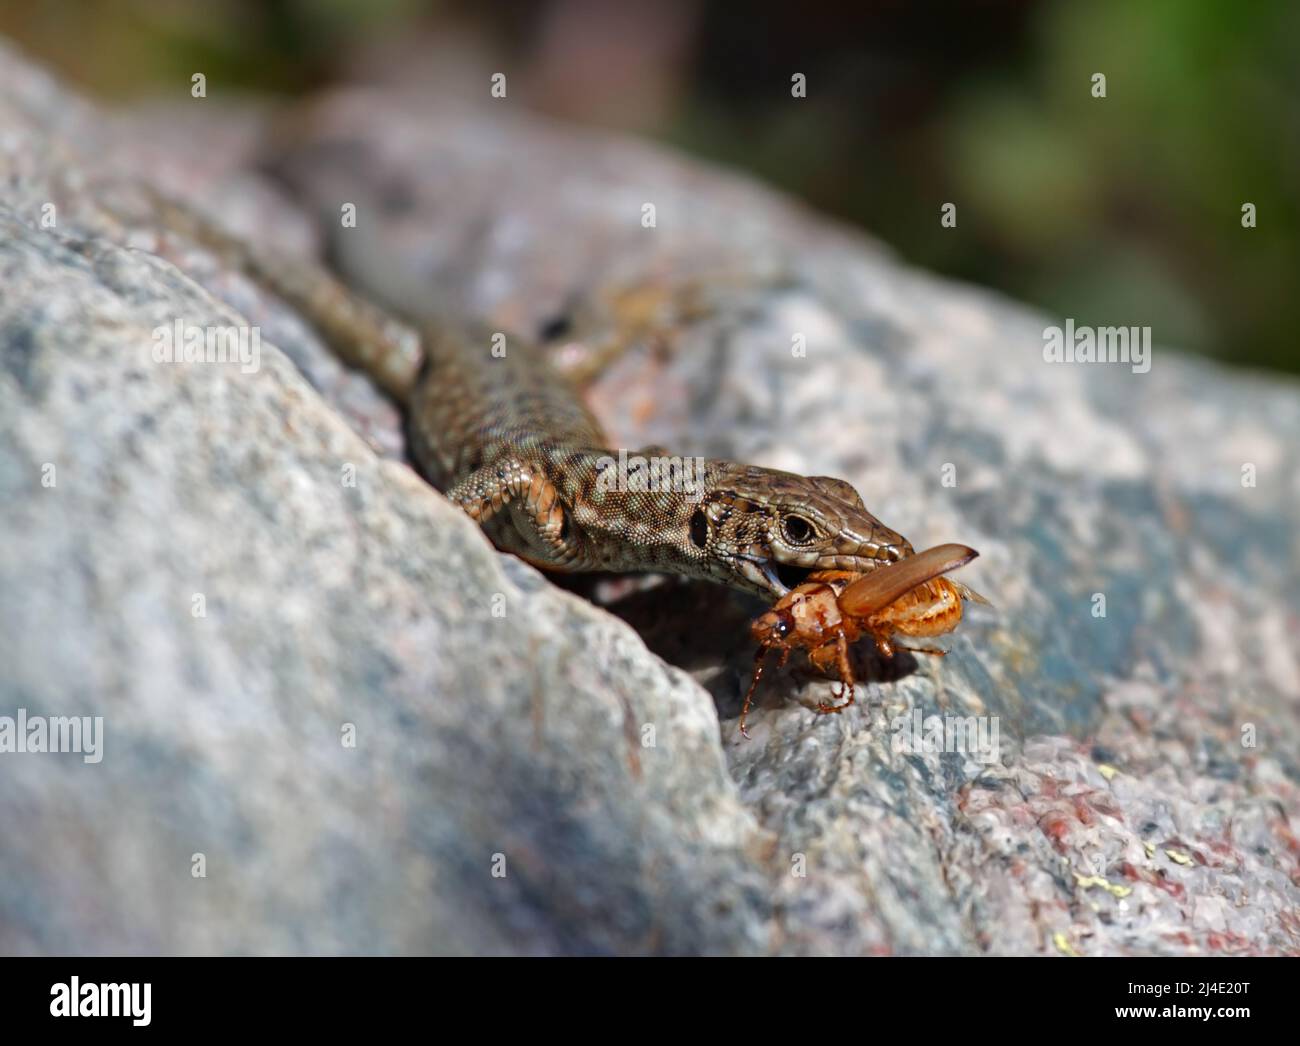 Tyrrhenian wall lizard eating a bug on Corsica, France Stock Photo